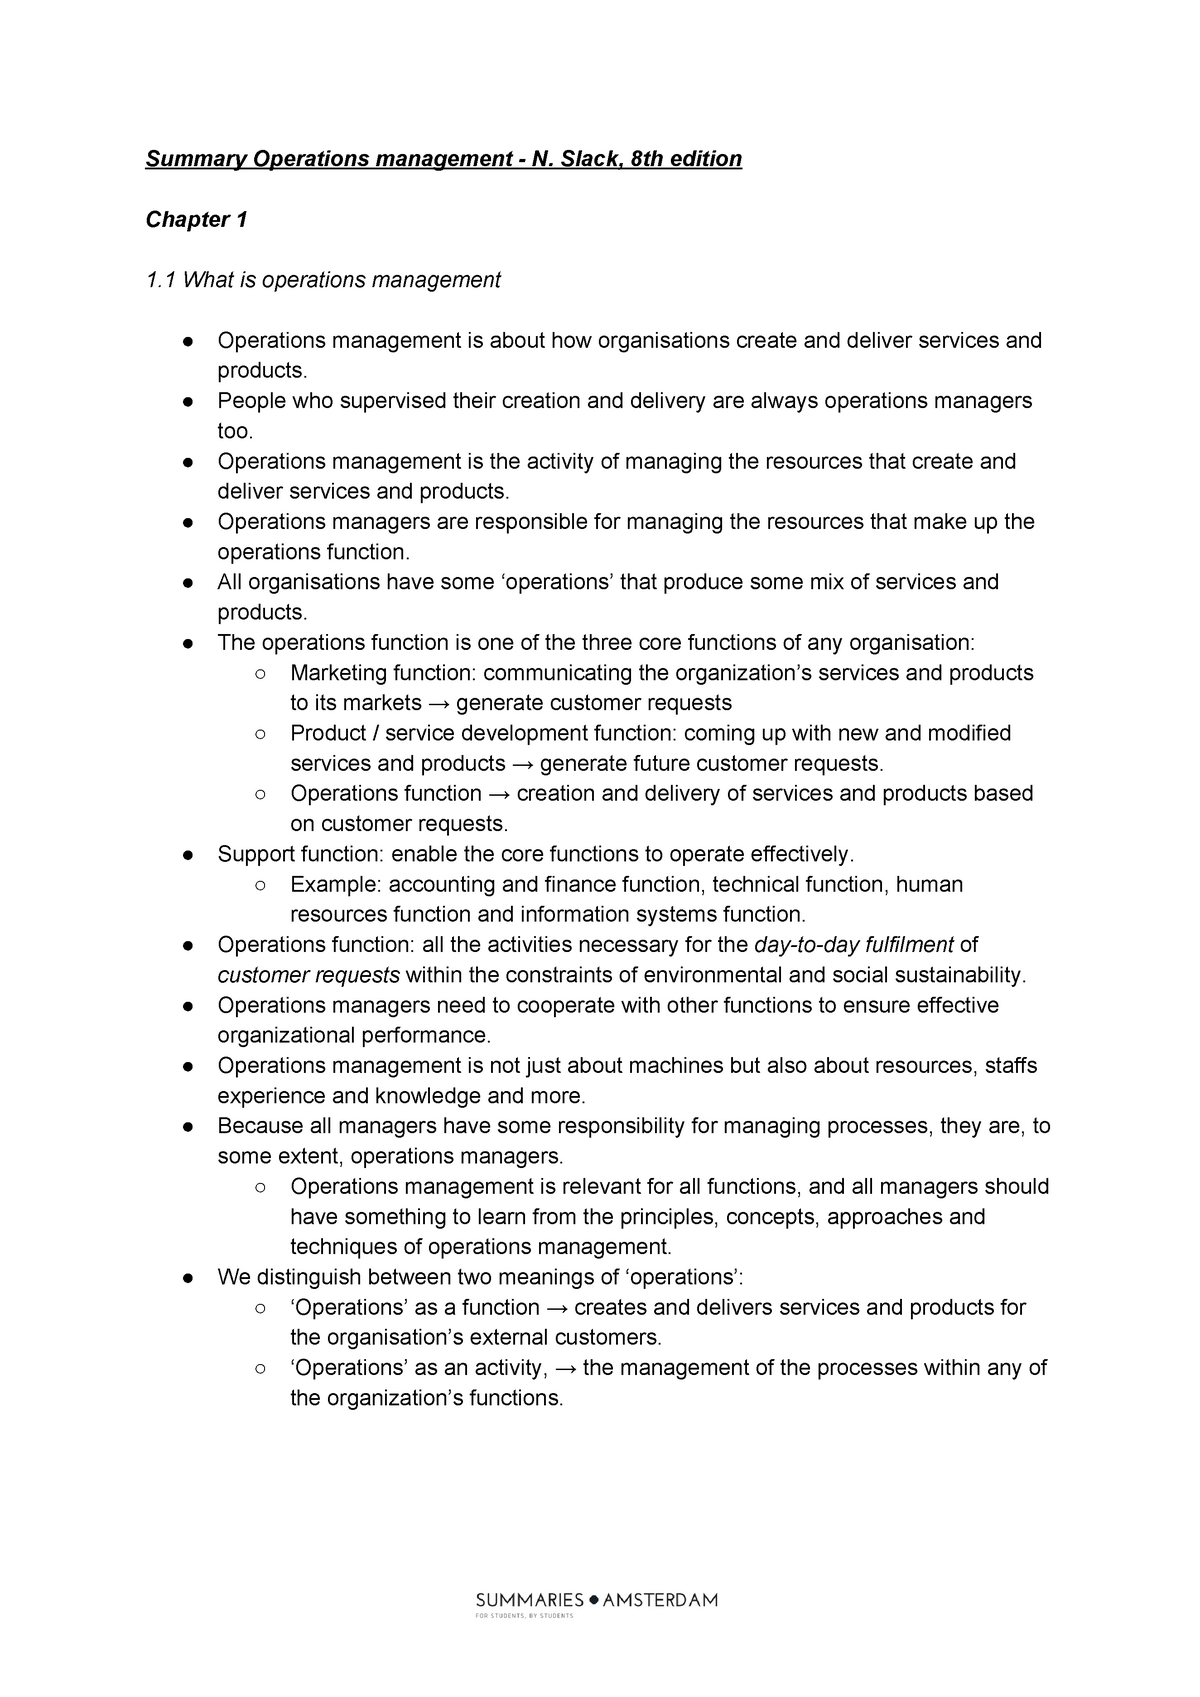 summary-operations-management-chapter-1-summary-operations-management-n-slack-8th-edition